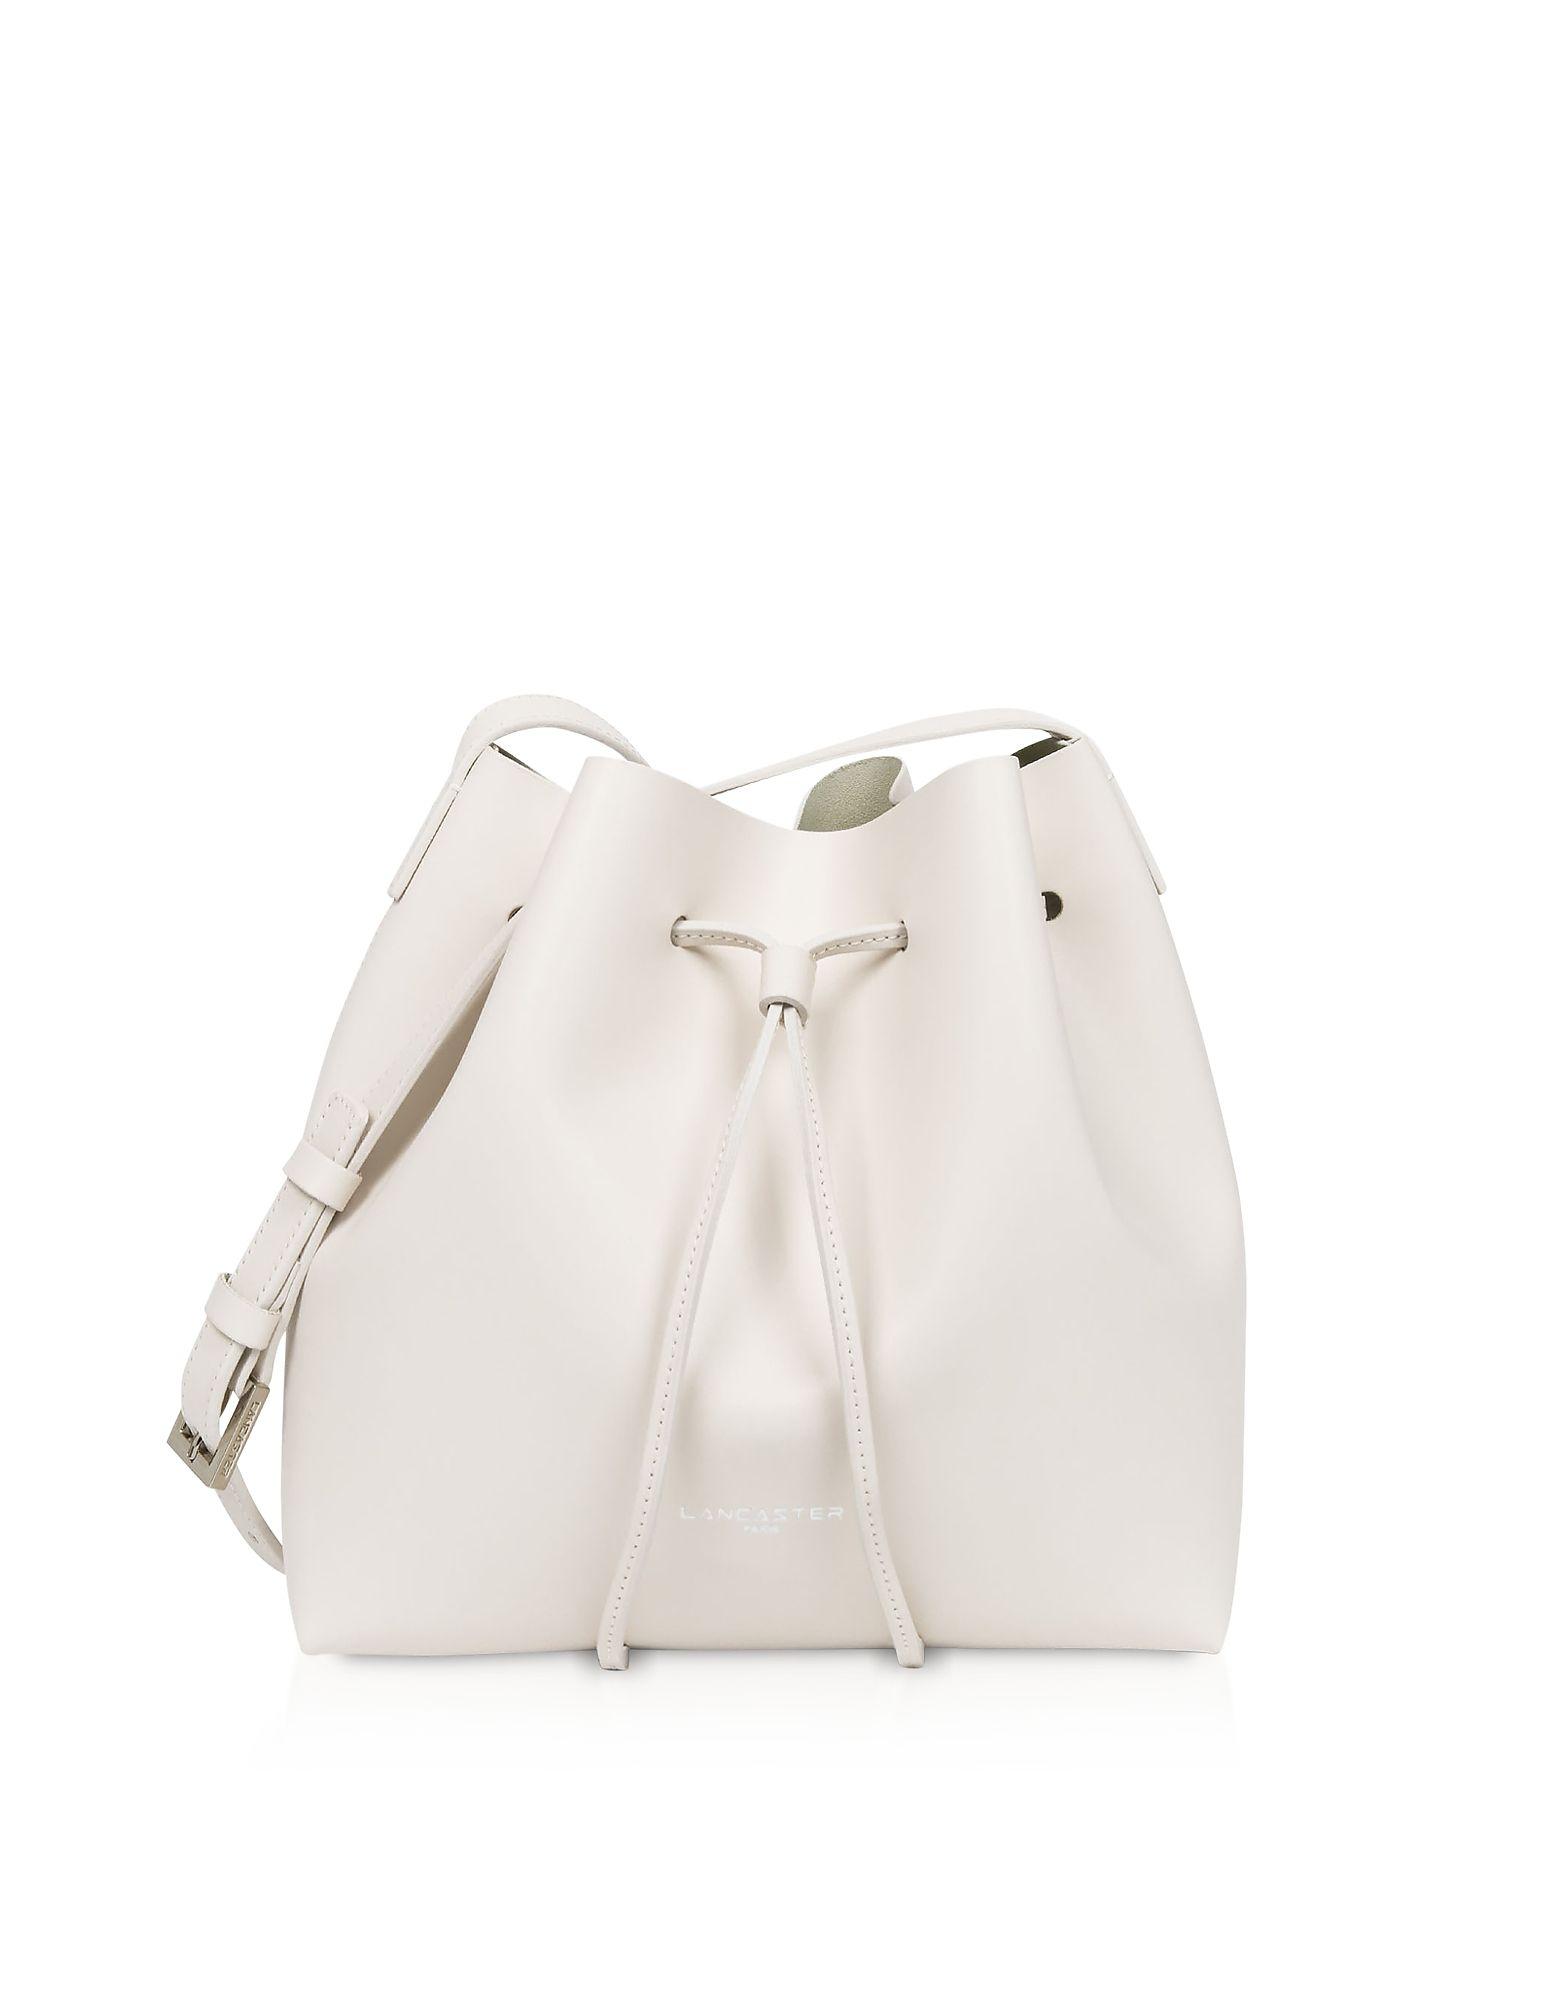 Lancaster Paris White Leather Handbag in White - Lyst